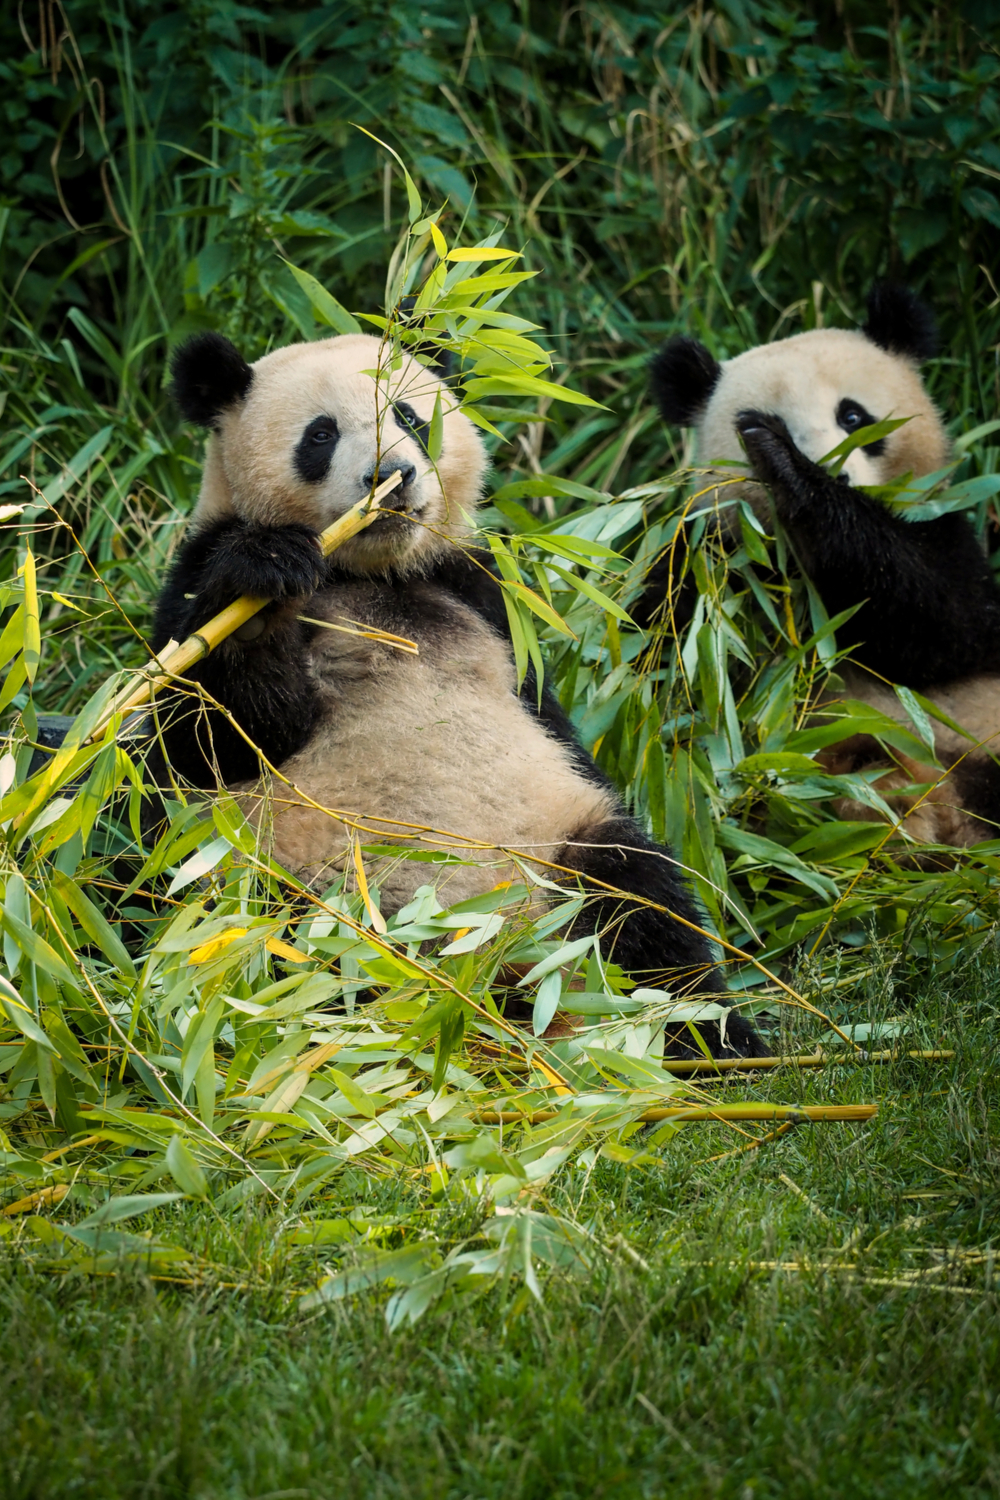 What exactly do pandas eat